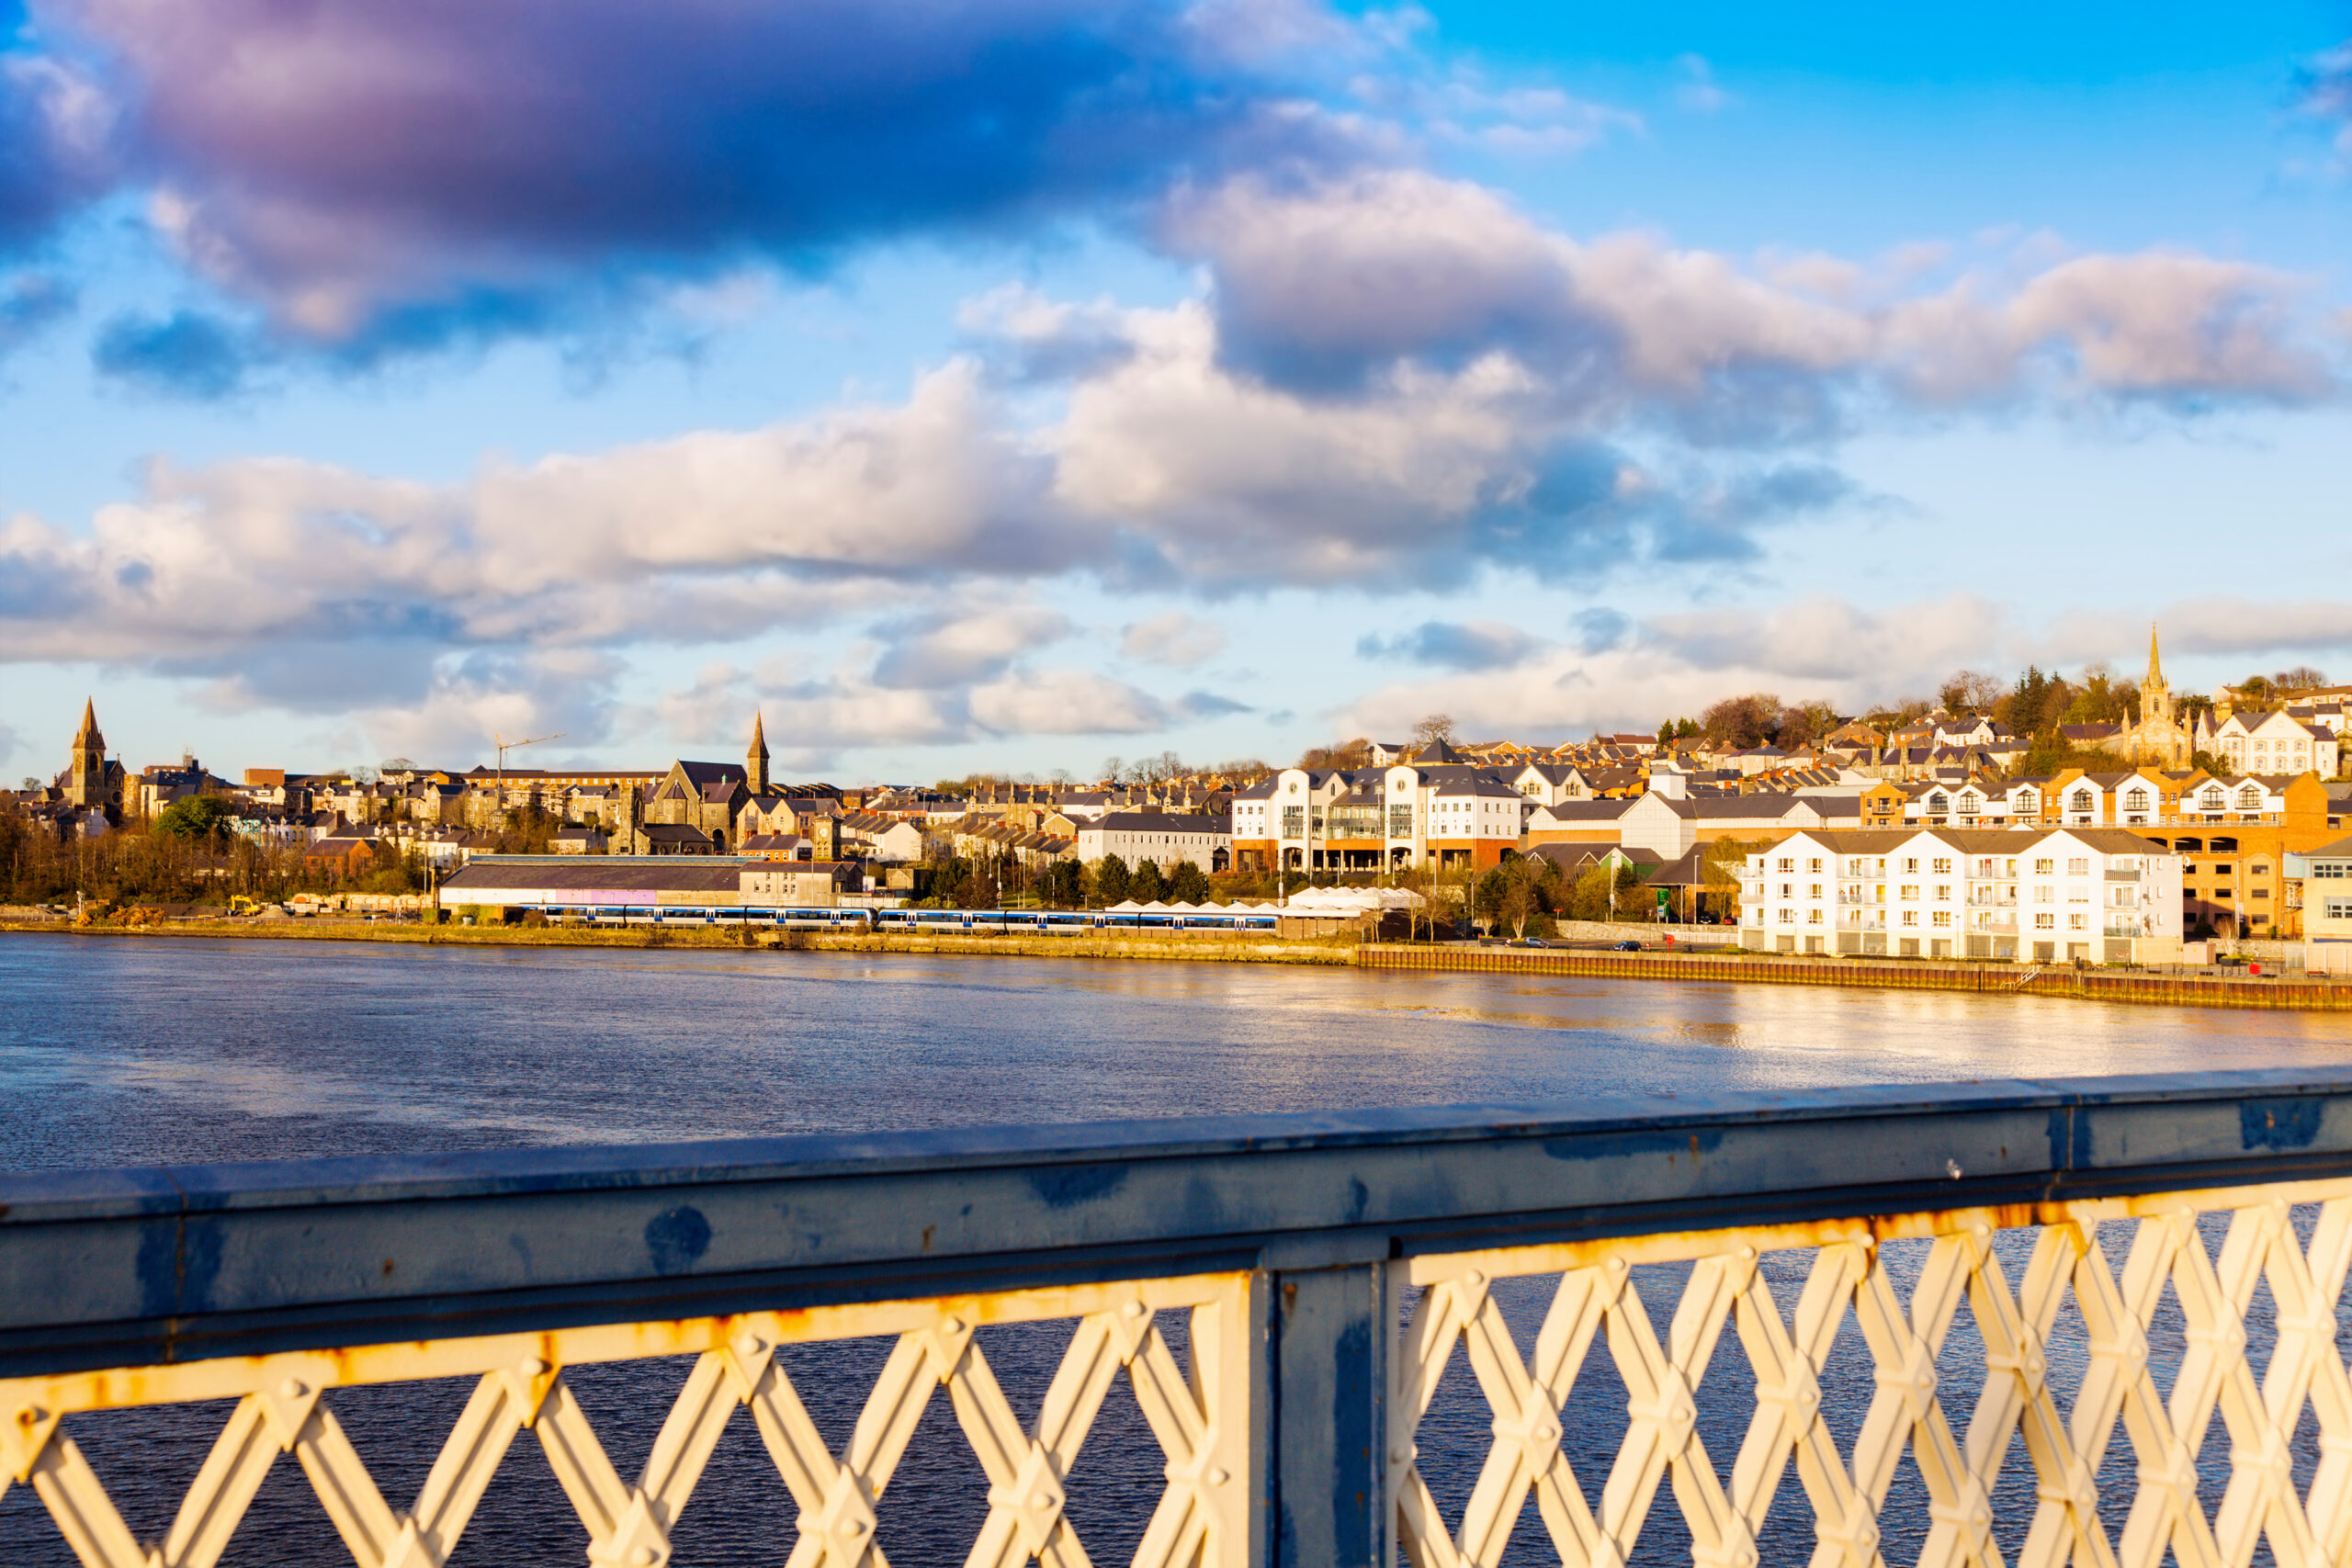 Derry panorama from Craigavon Bridge